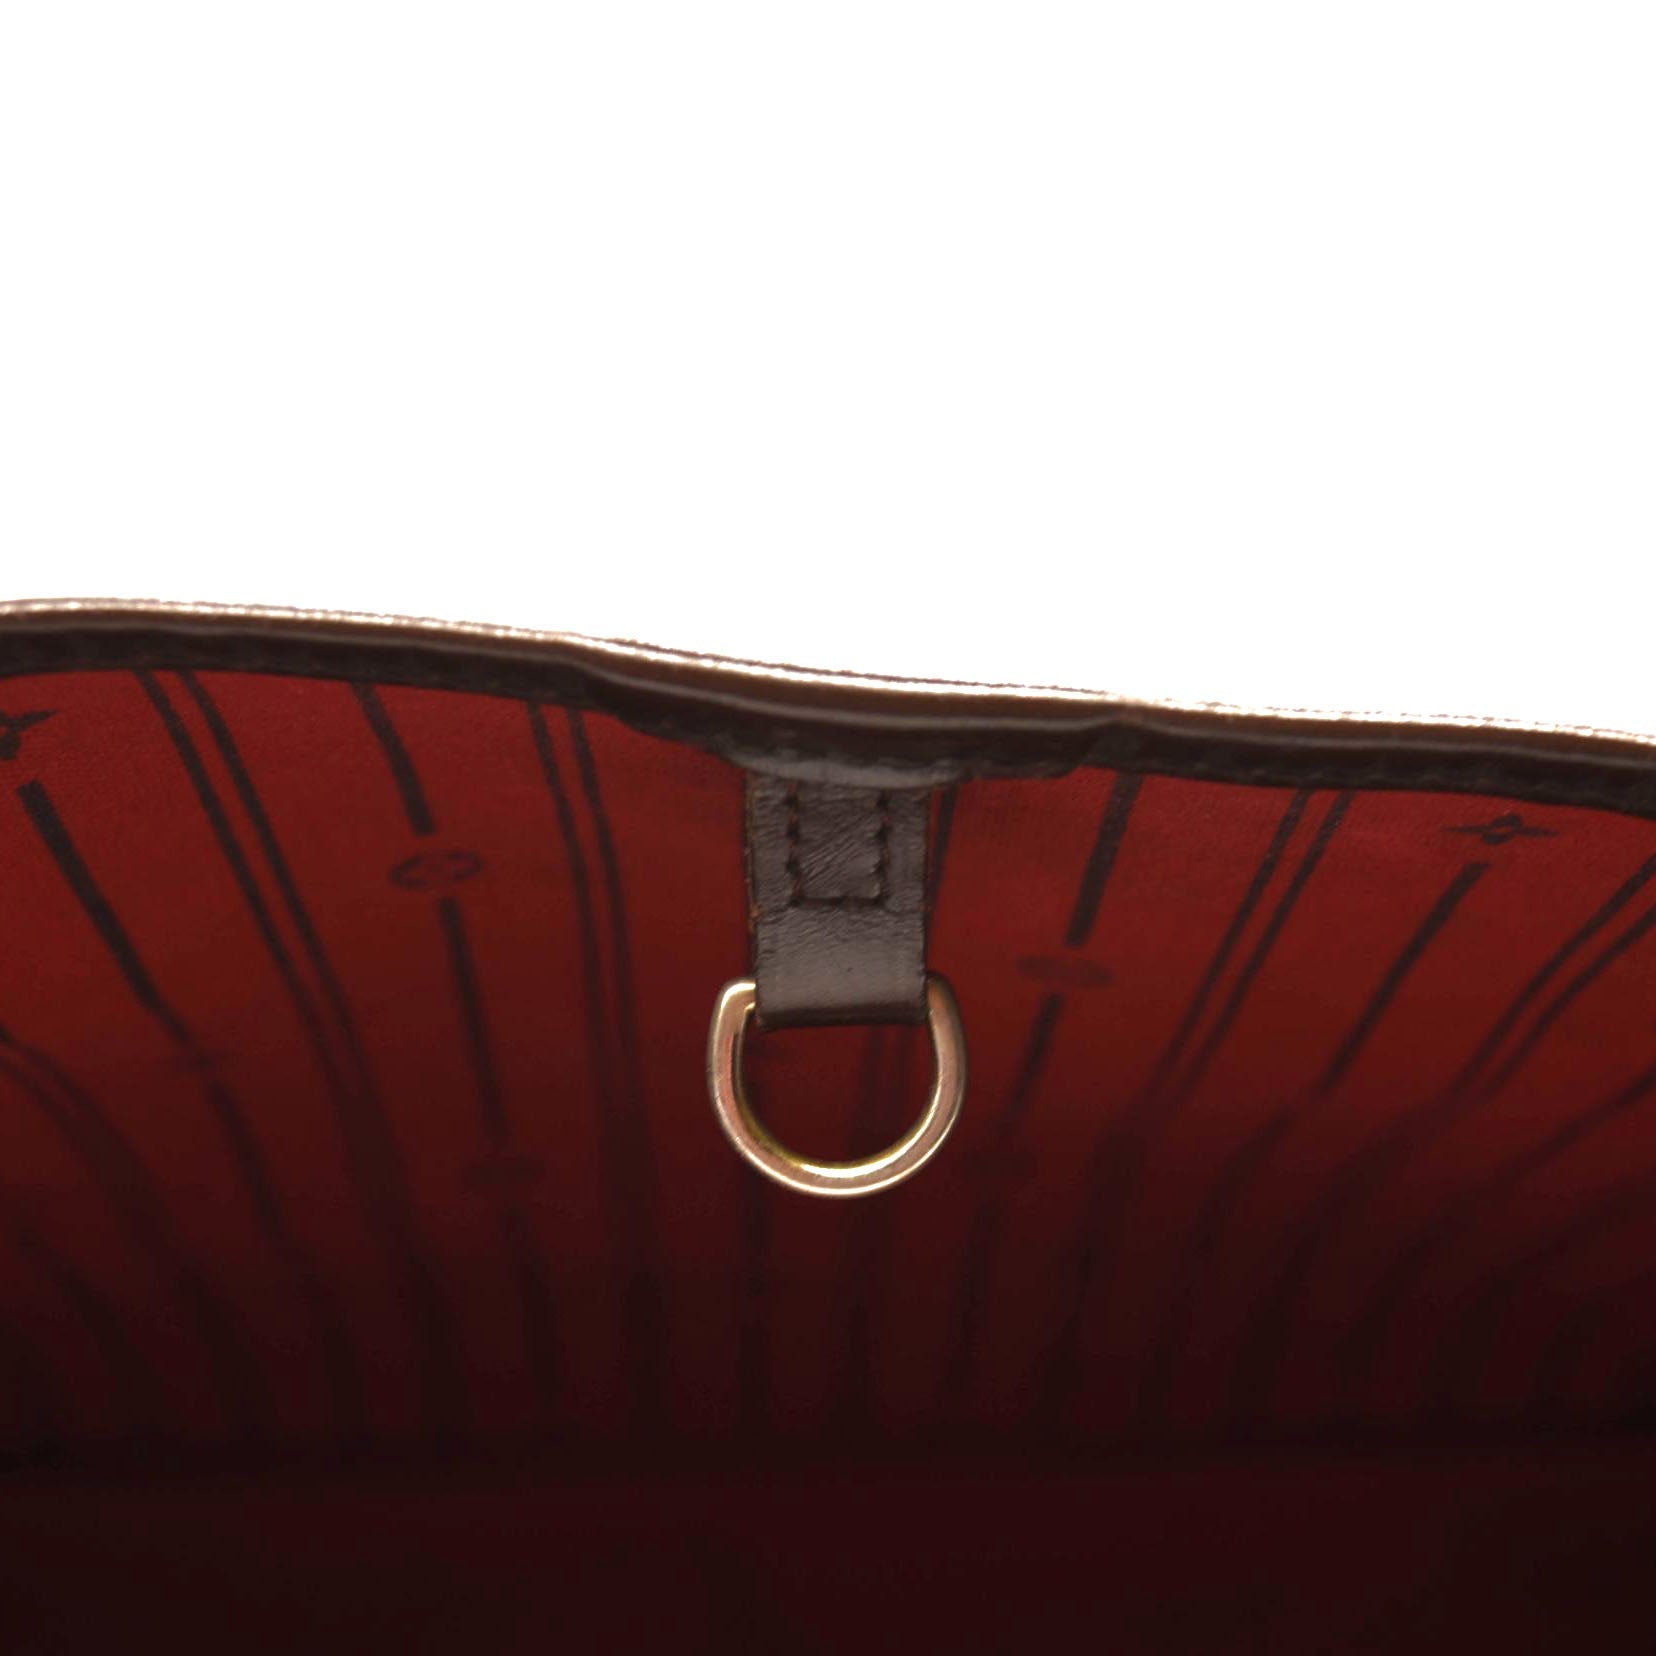 Louis Vuitton Damier Ebene Neverfull MM Wristlet Pouch/Clutch (Red Interior)